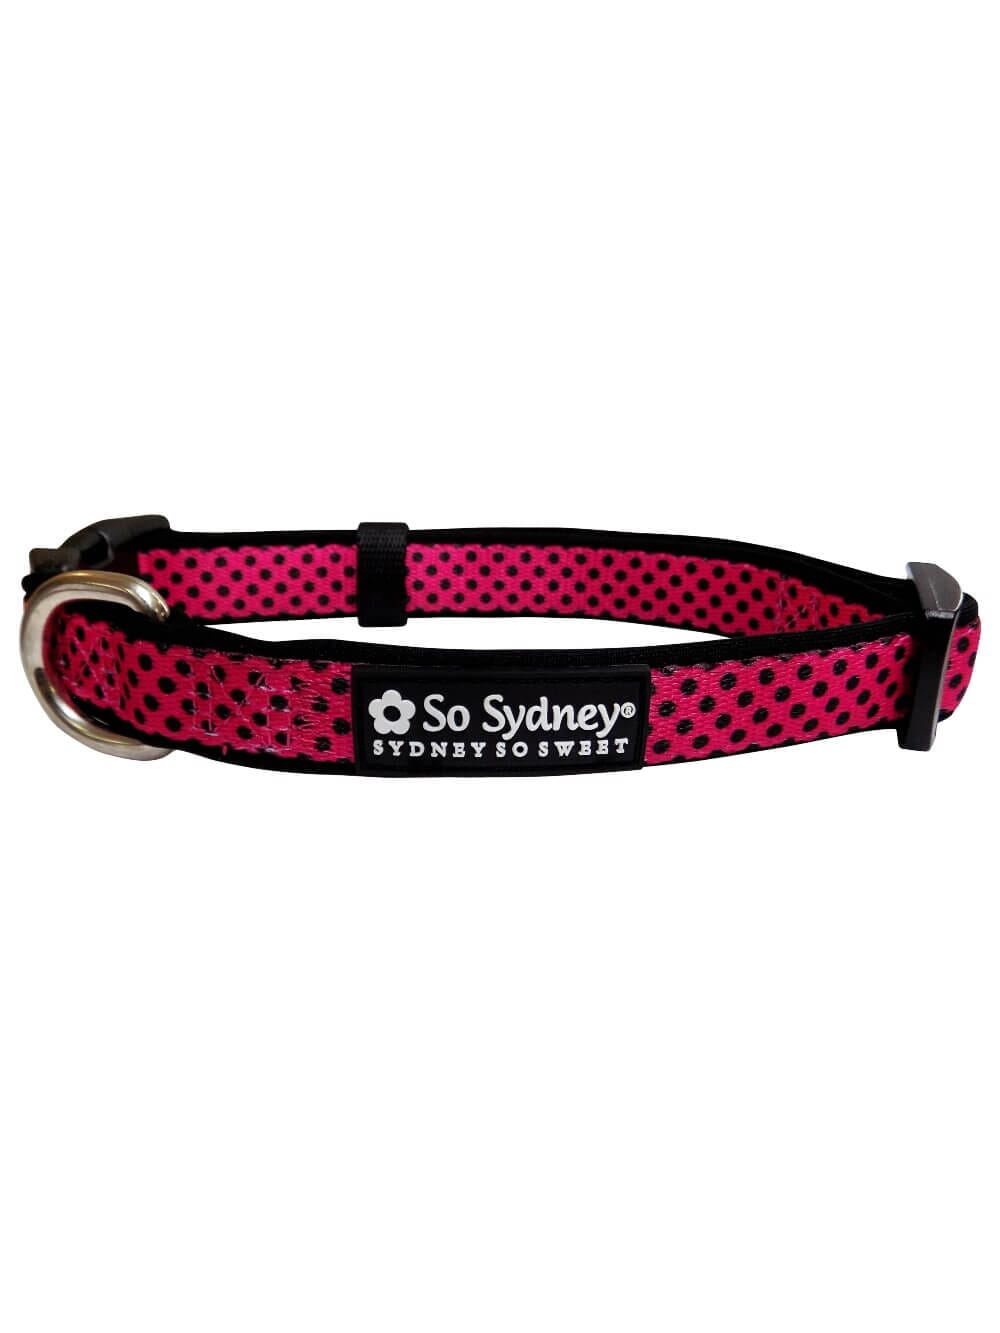 Black & Hot Pink Polka Dots Fashion Dog Collar - Sydney So Sweet